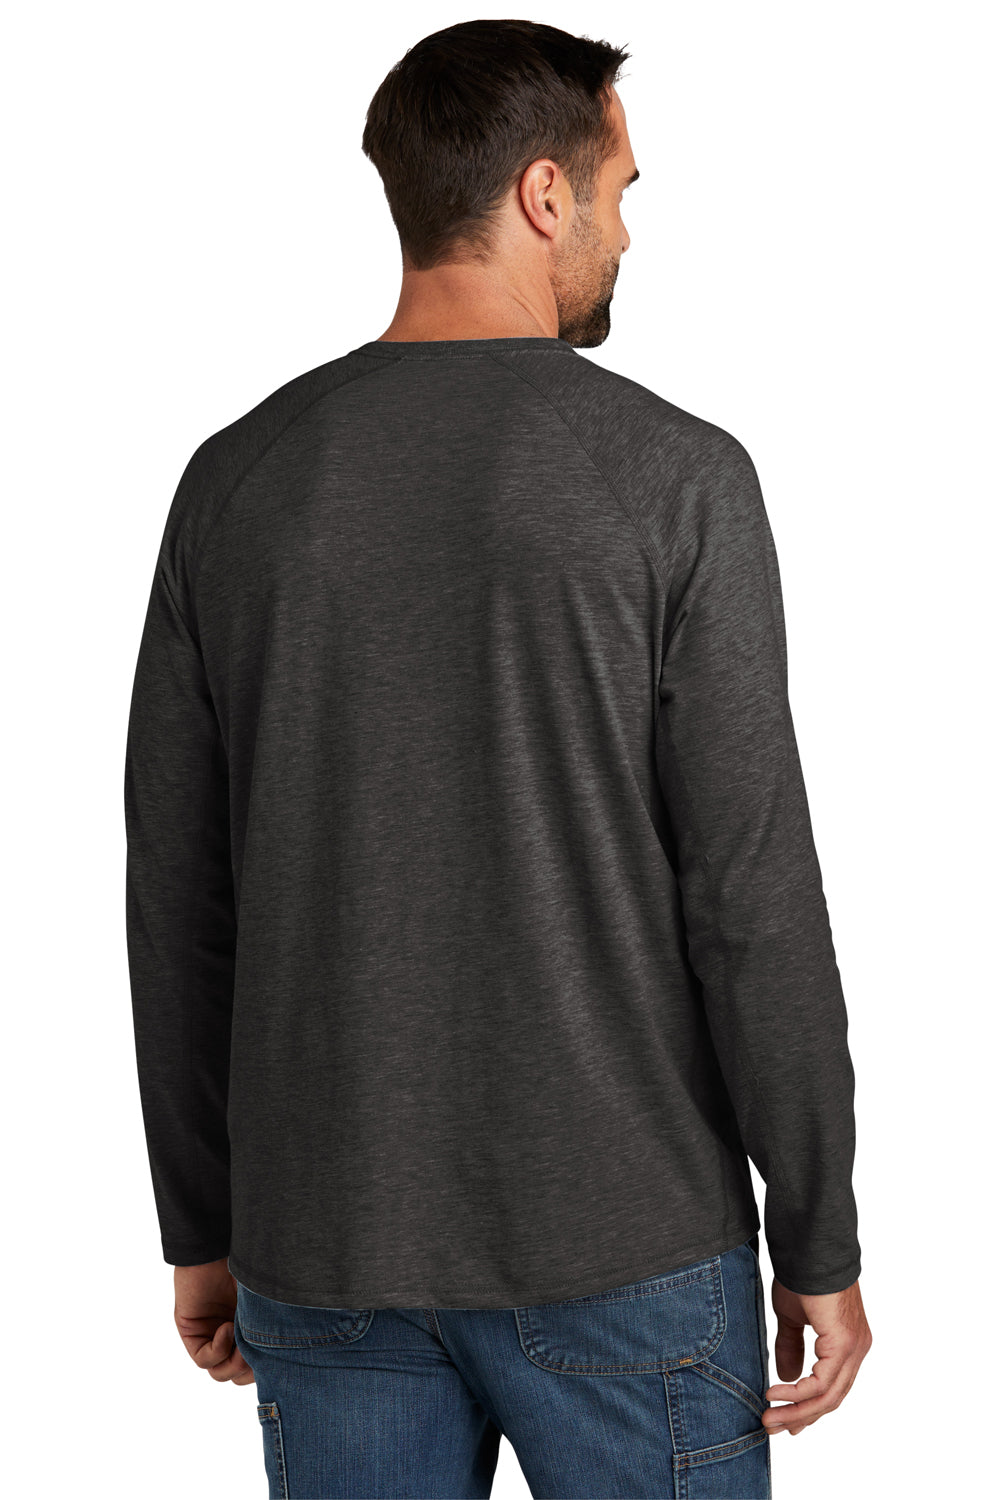 Carhartt CT104617 Mens Force Moisture Wicking Long Sleeve Crewneck T-Shirt w/ Pocket Heather Carbon Grey Model Back